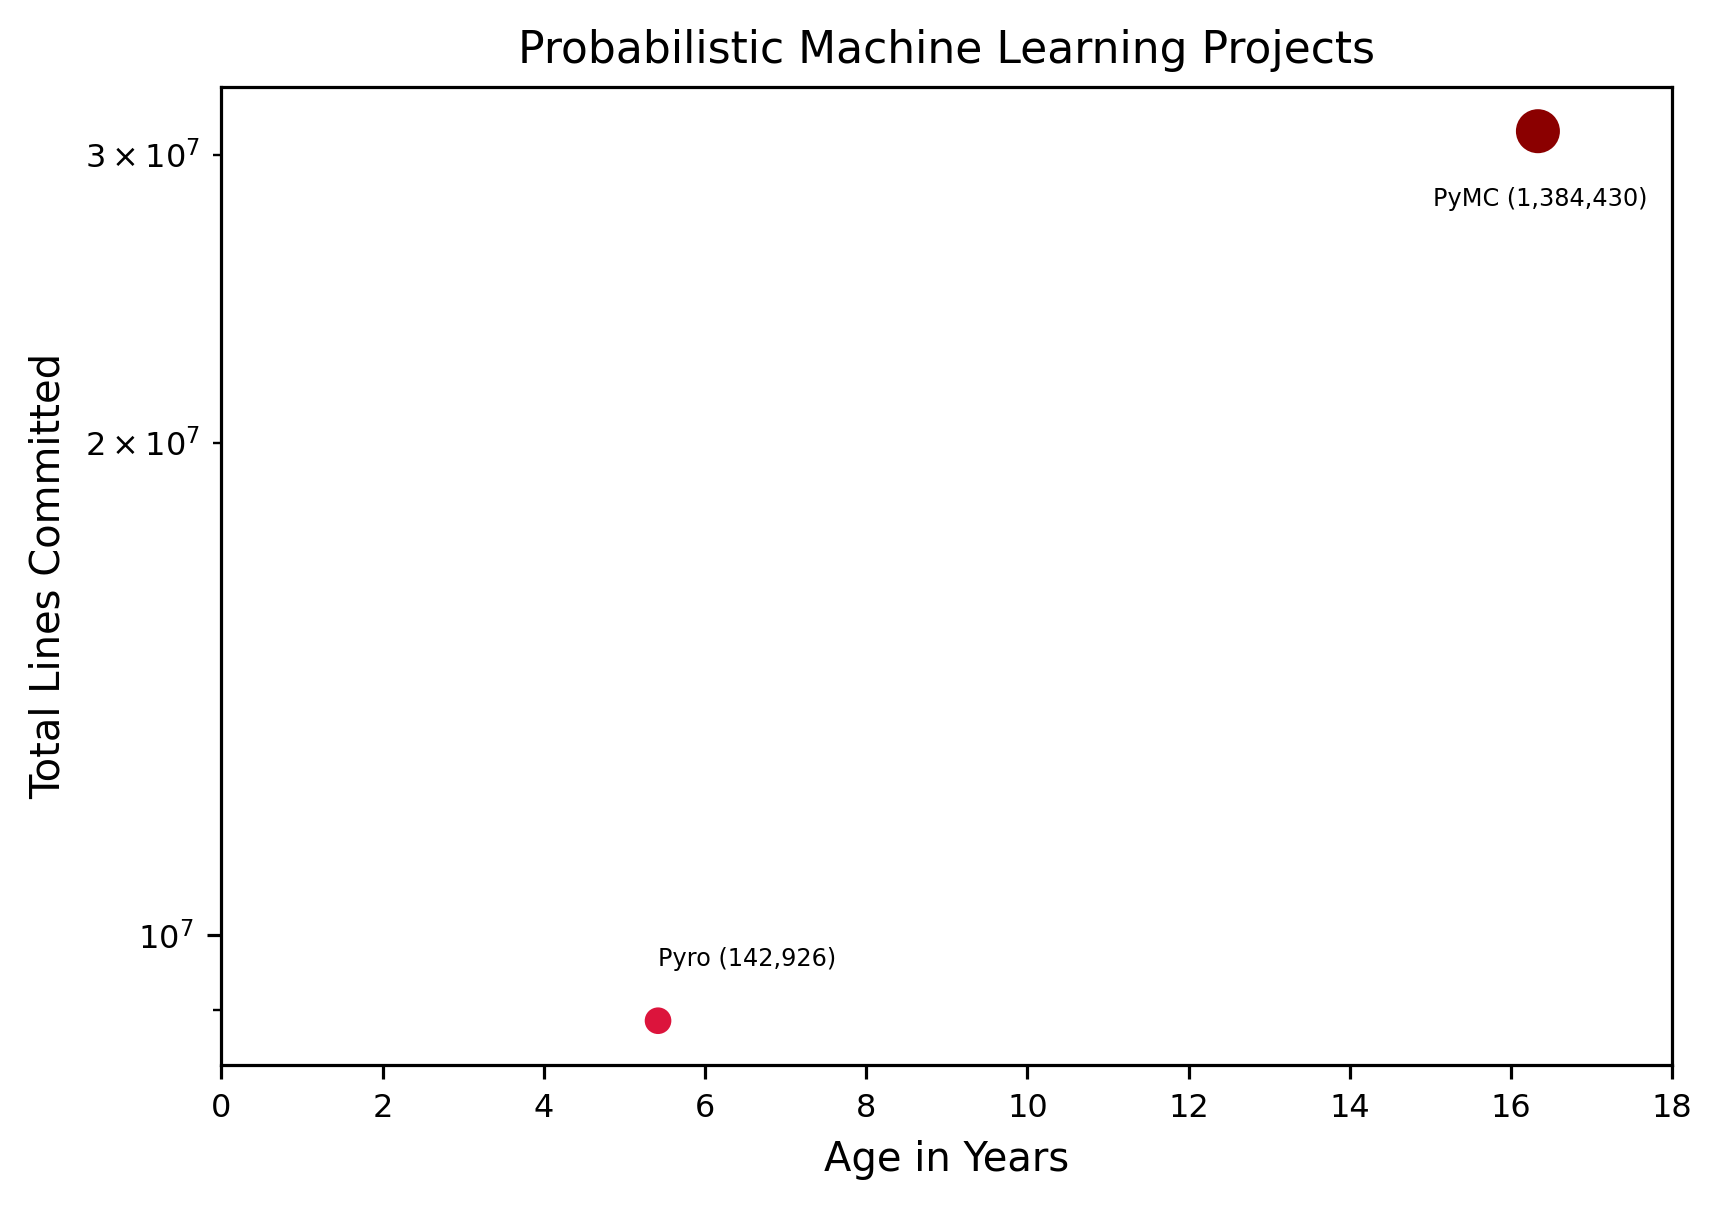 ../_images/probabilistic_machine_learning-comparison-chart.png